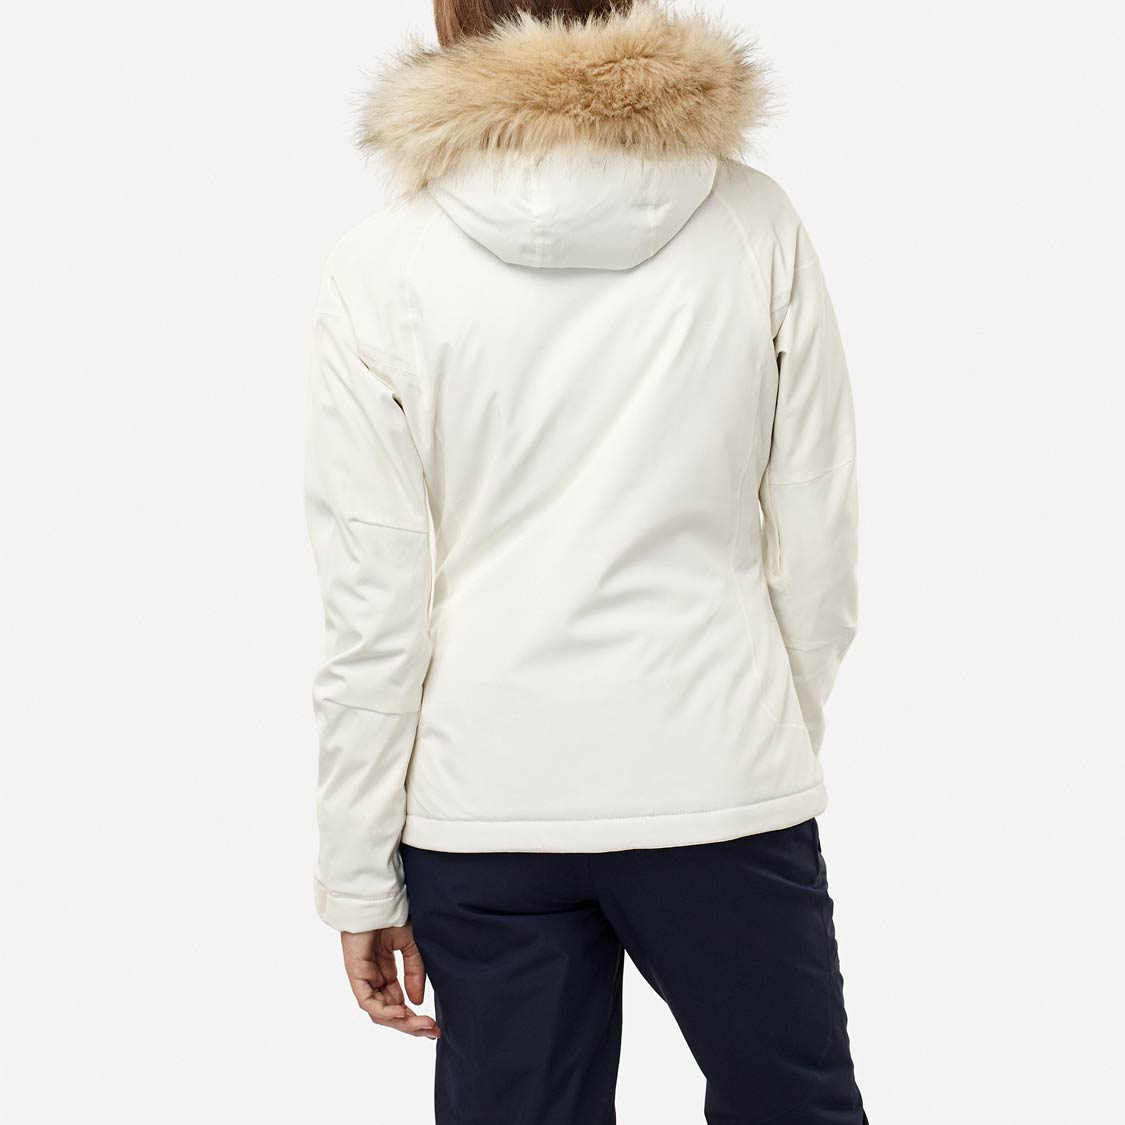 Női sí/snowboard kabát